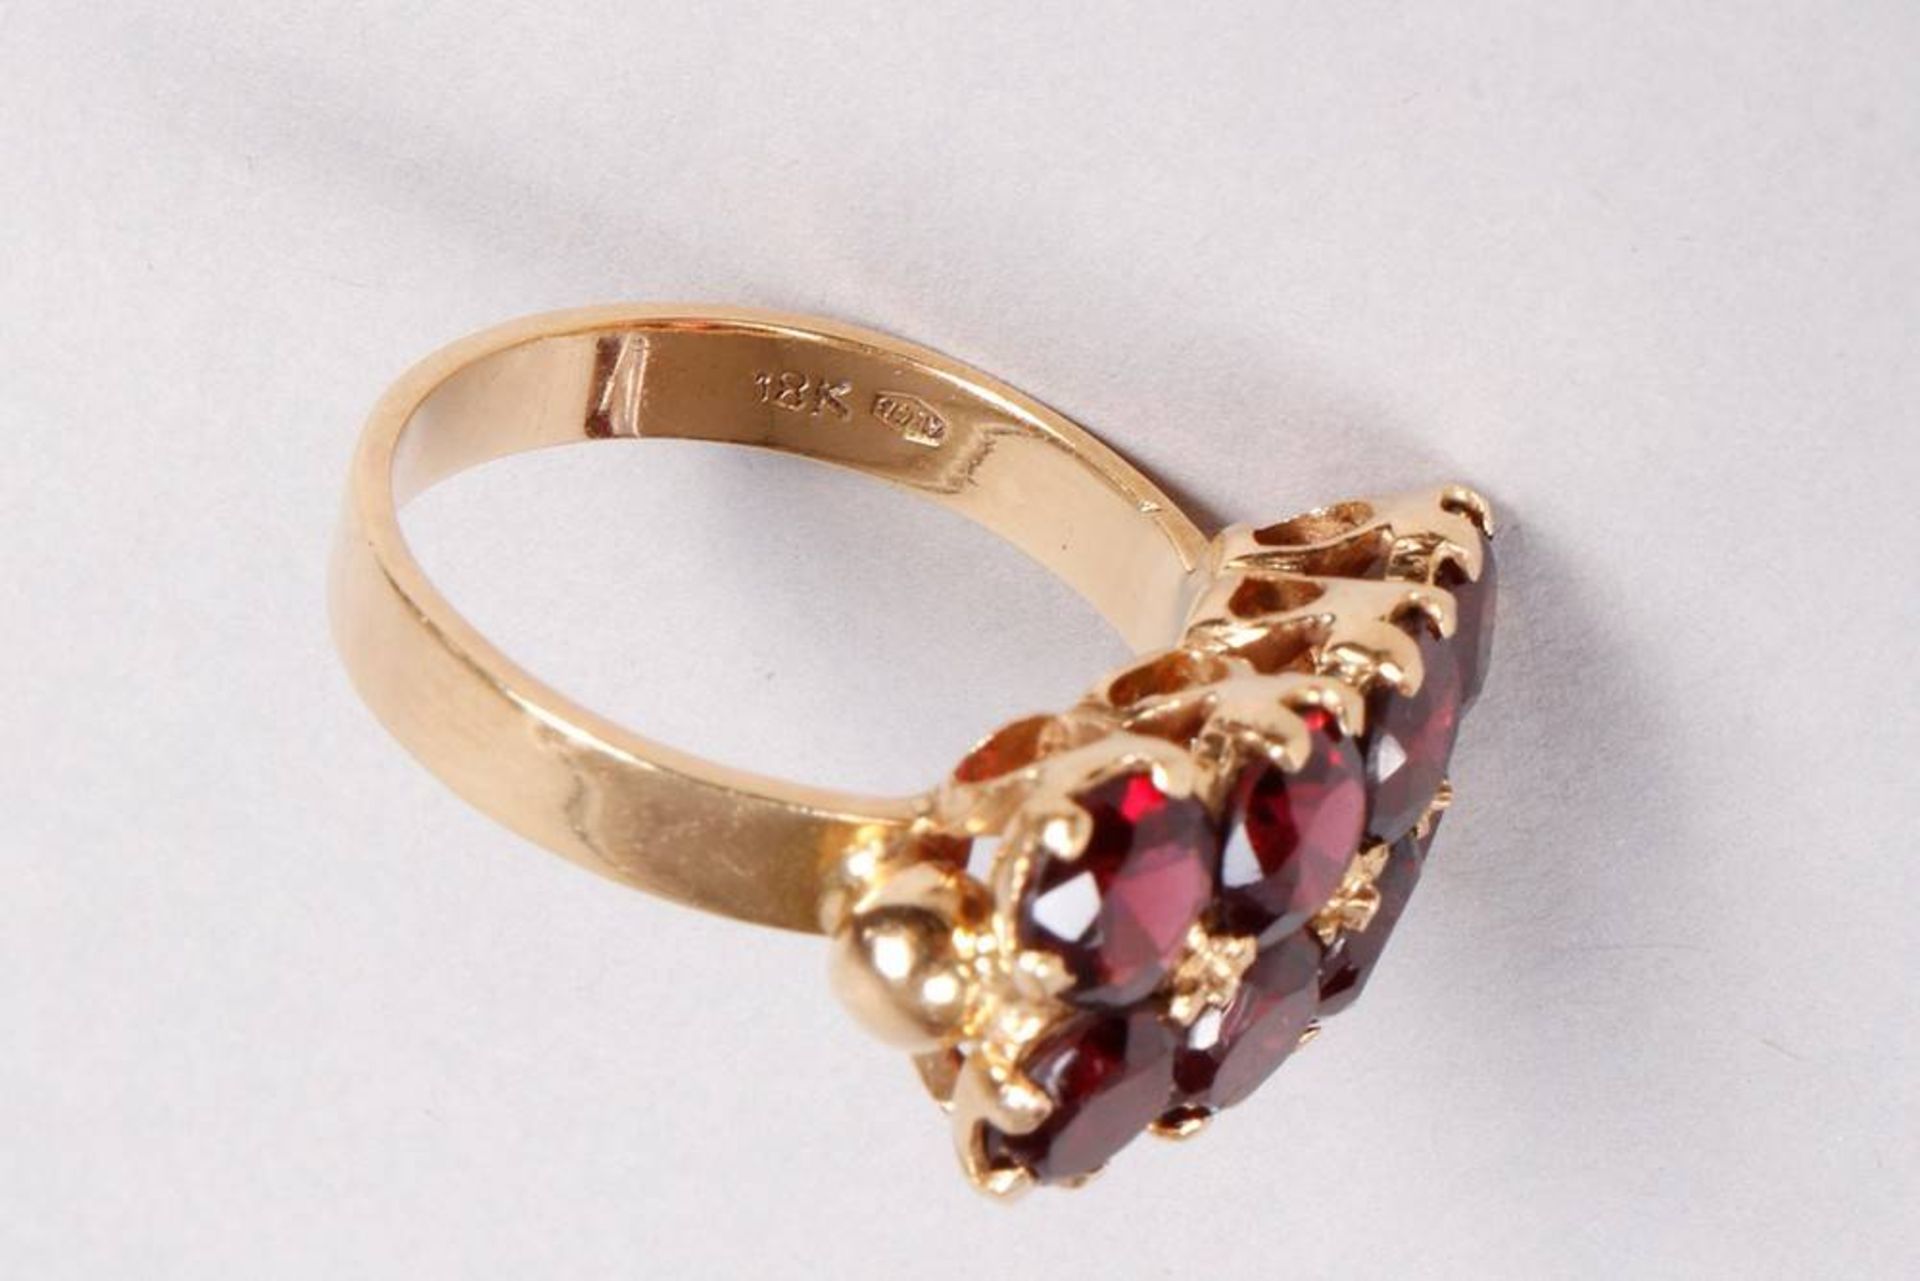 Large ring with 8 large diamond cut garnet stones, 750 gold, Italy around 1950 - Image 4 of 5